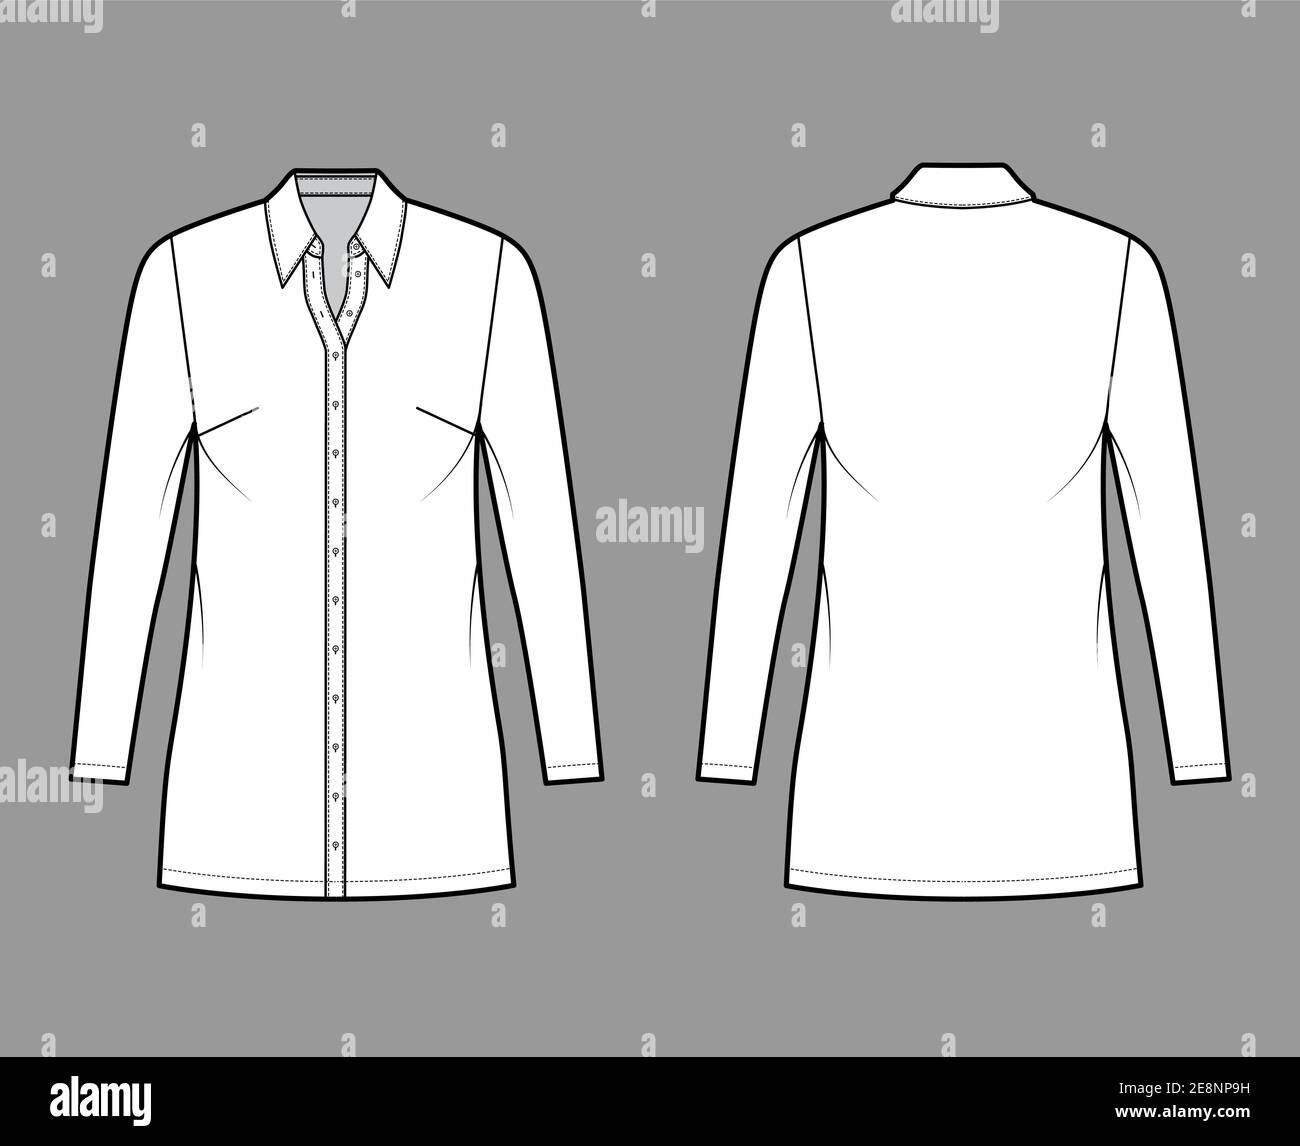 Shirt dress technical fashion illustration with classic regular collar ...